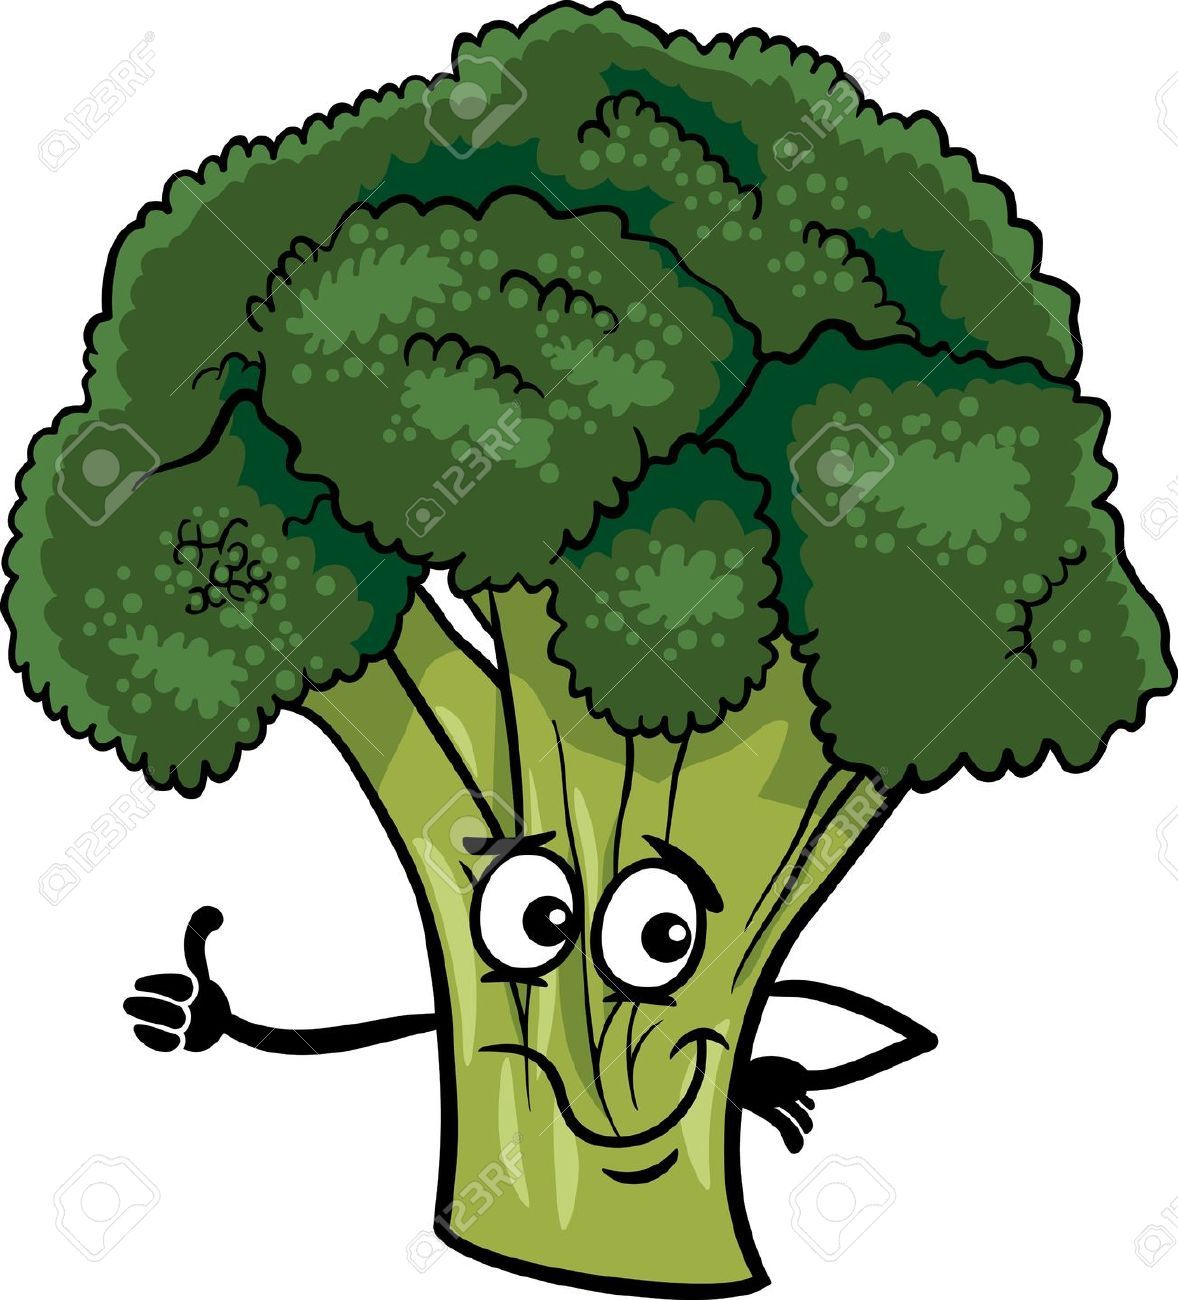 Broccoli vegitables